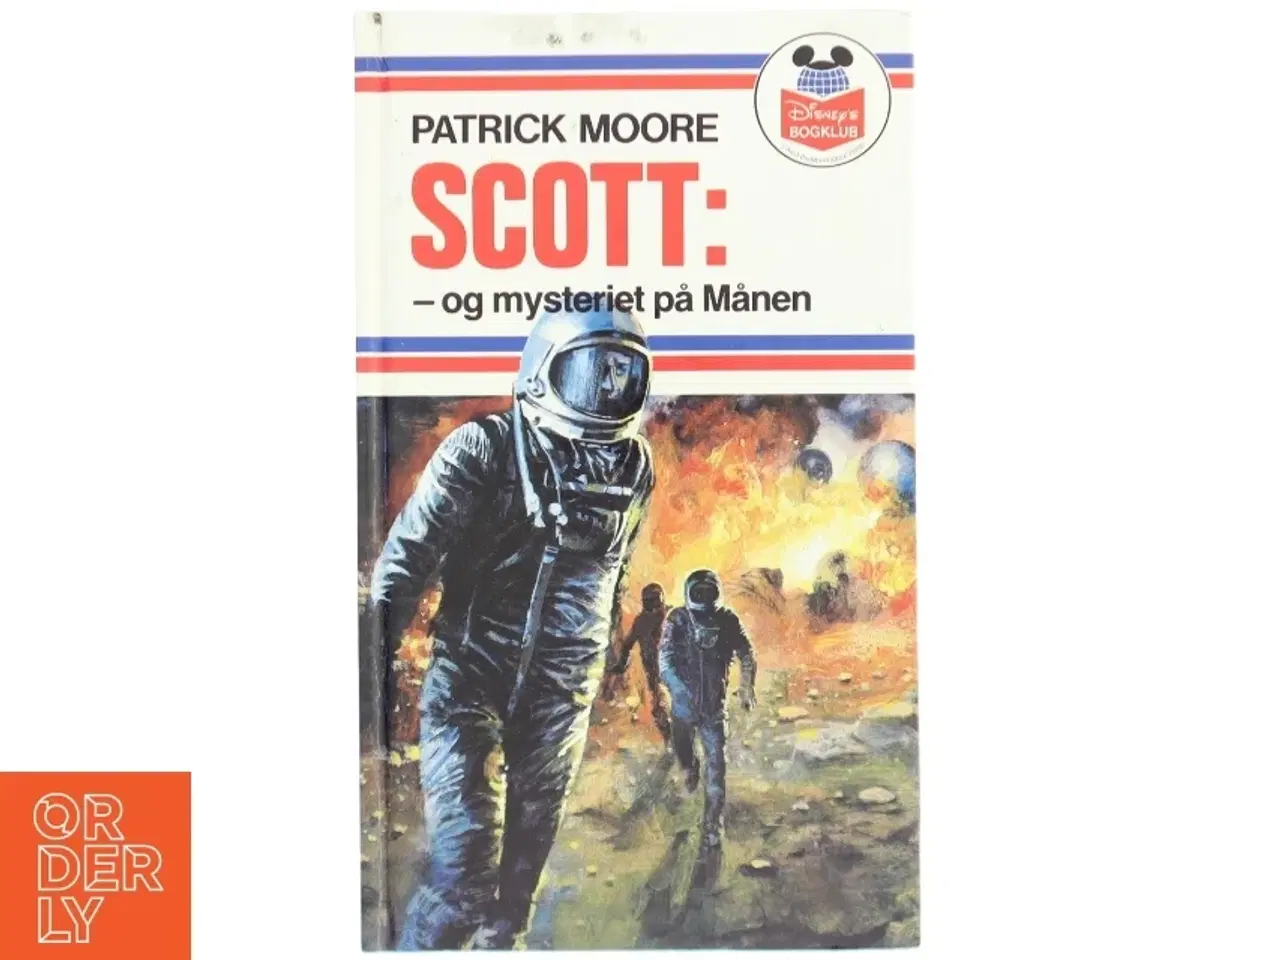 Billede 1 - Patrick Moore, Scott: og mysteriet på månen